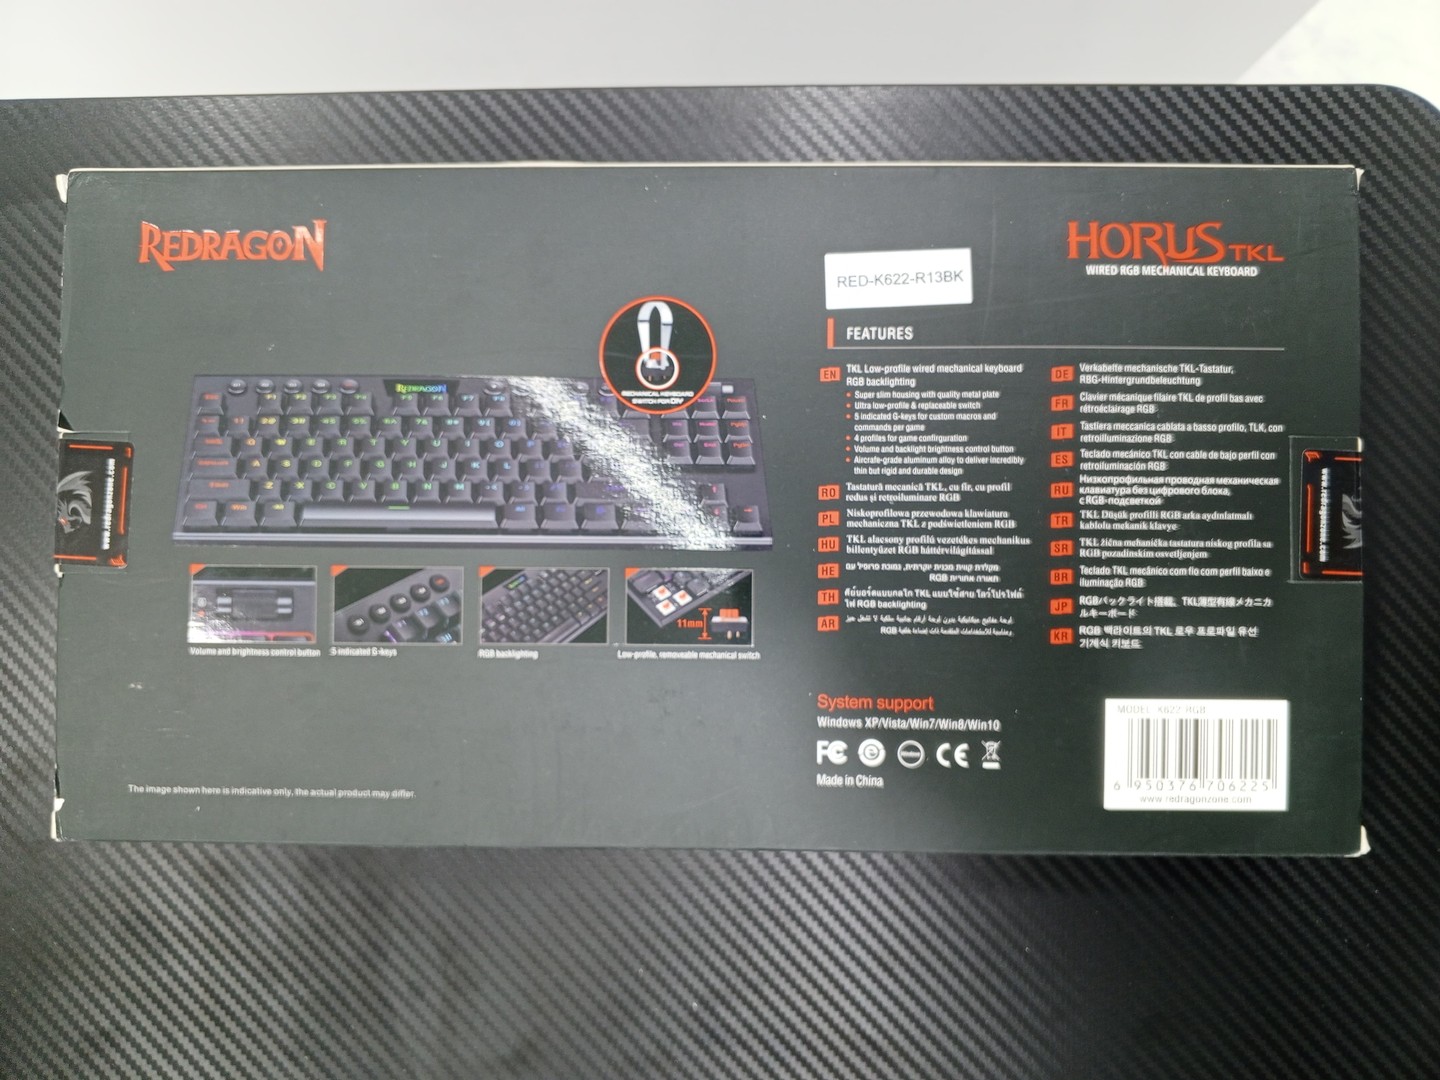 computadoras y laptops - Teclado Redragon K618 Horus Wireless RGB Mechanical Keyboard
 1